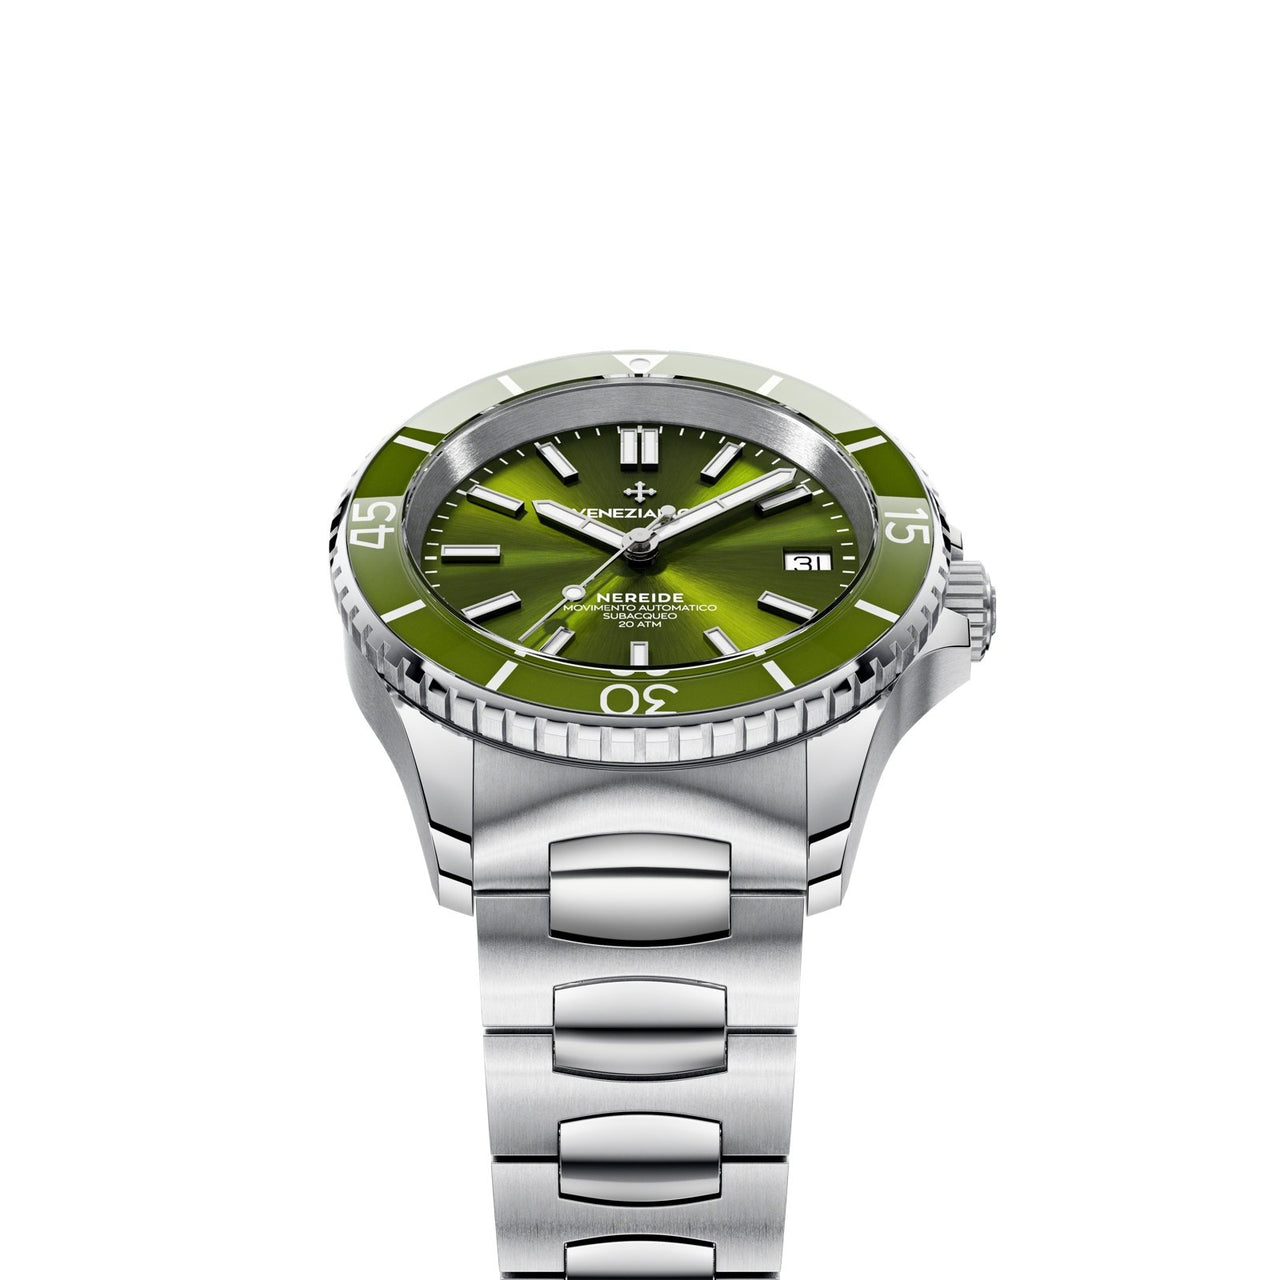 Venezianico Automatic Watch Nereide 39 Canova Bracelet Green 3121501C - Watches & Crystals